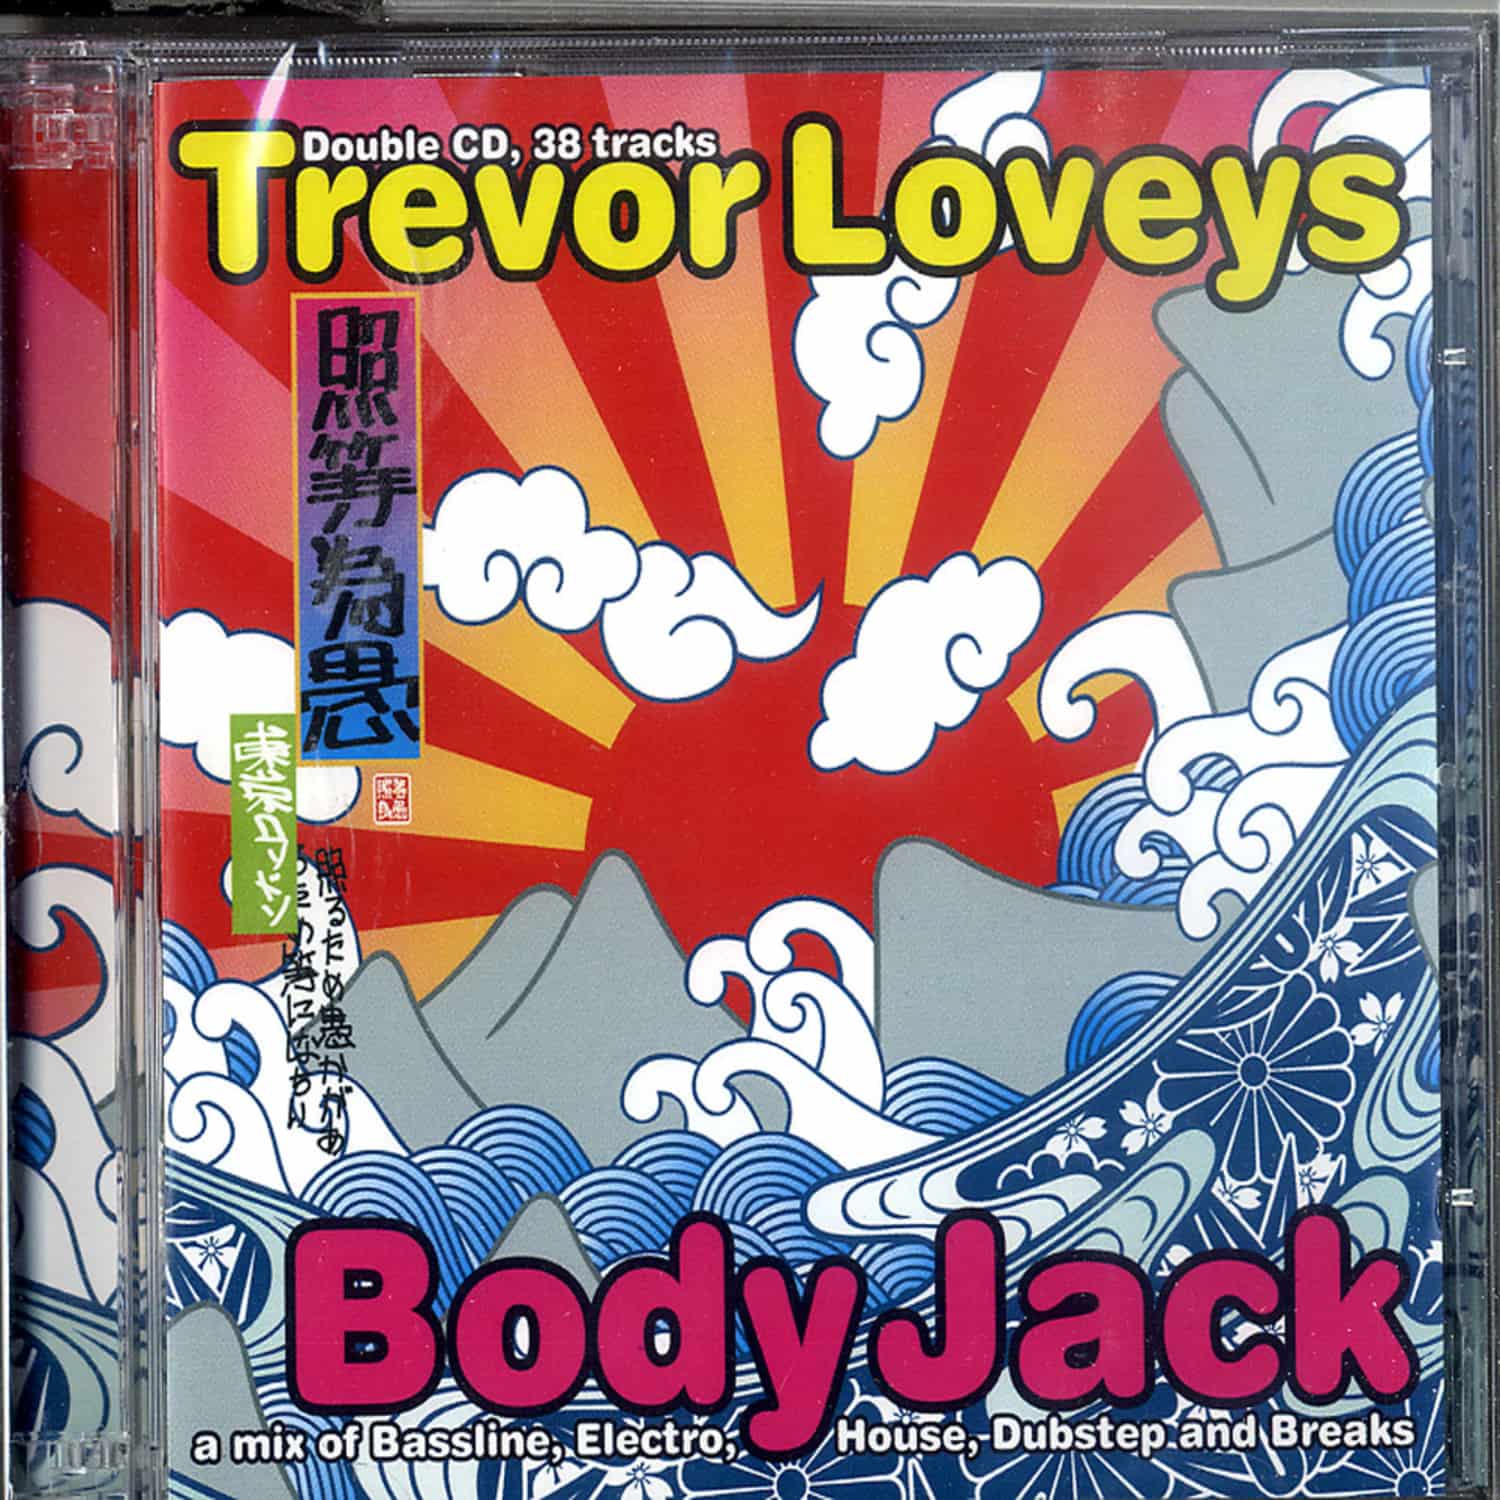 Trevor Loveys - BODY JACK 